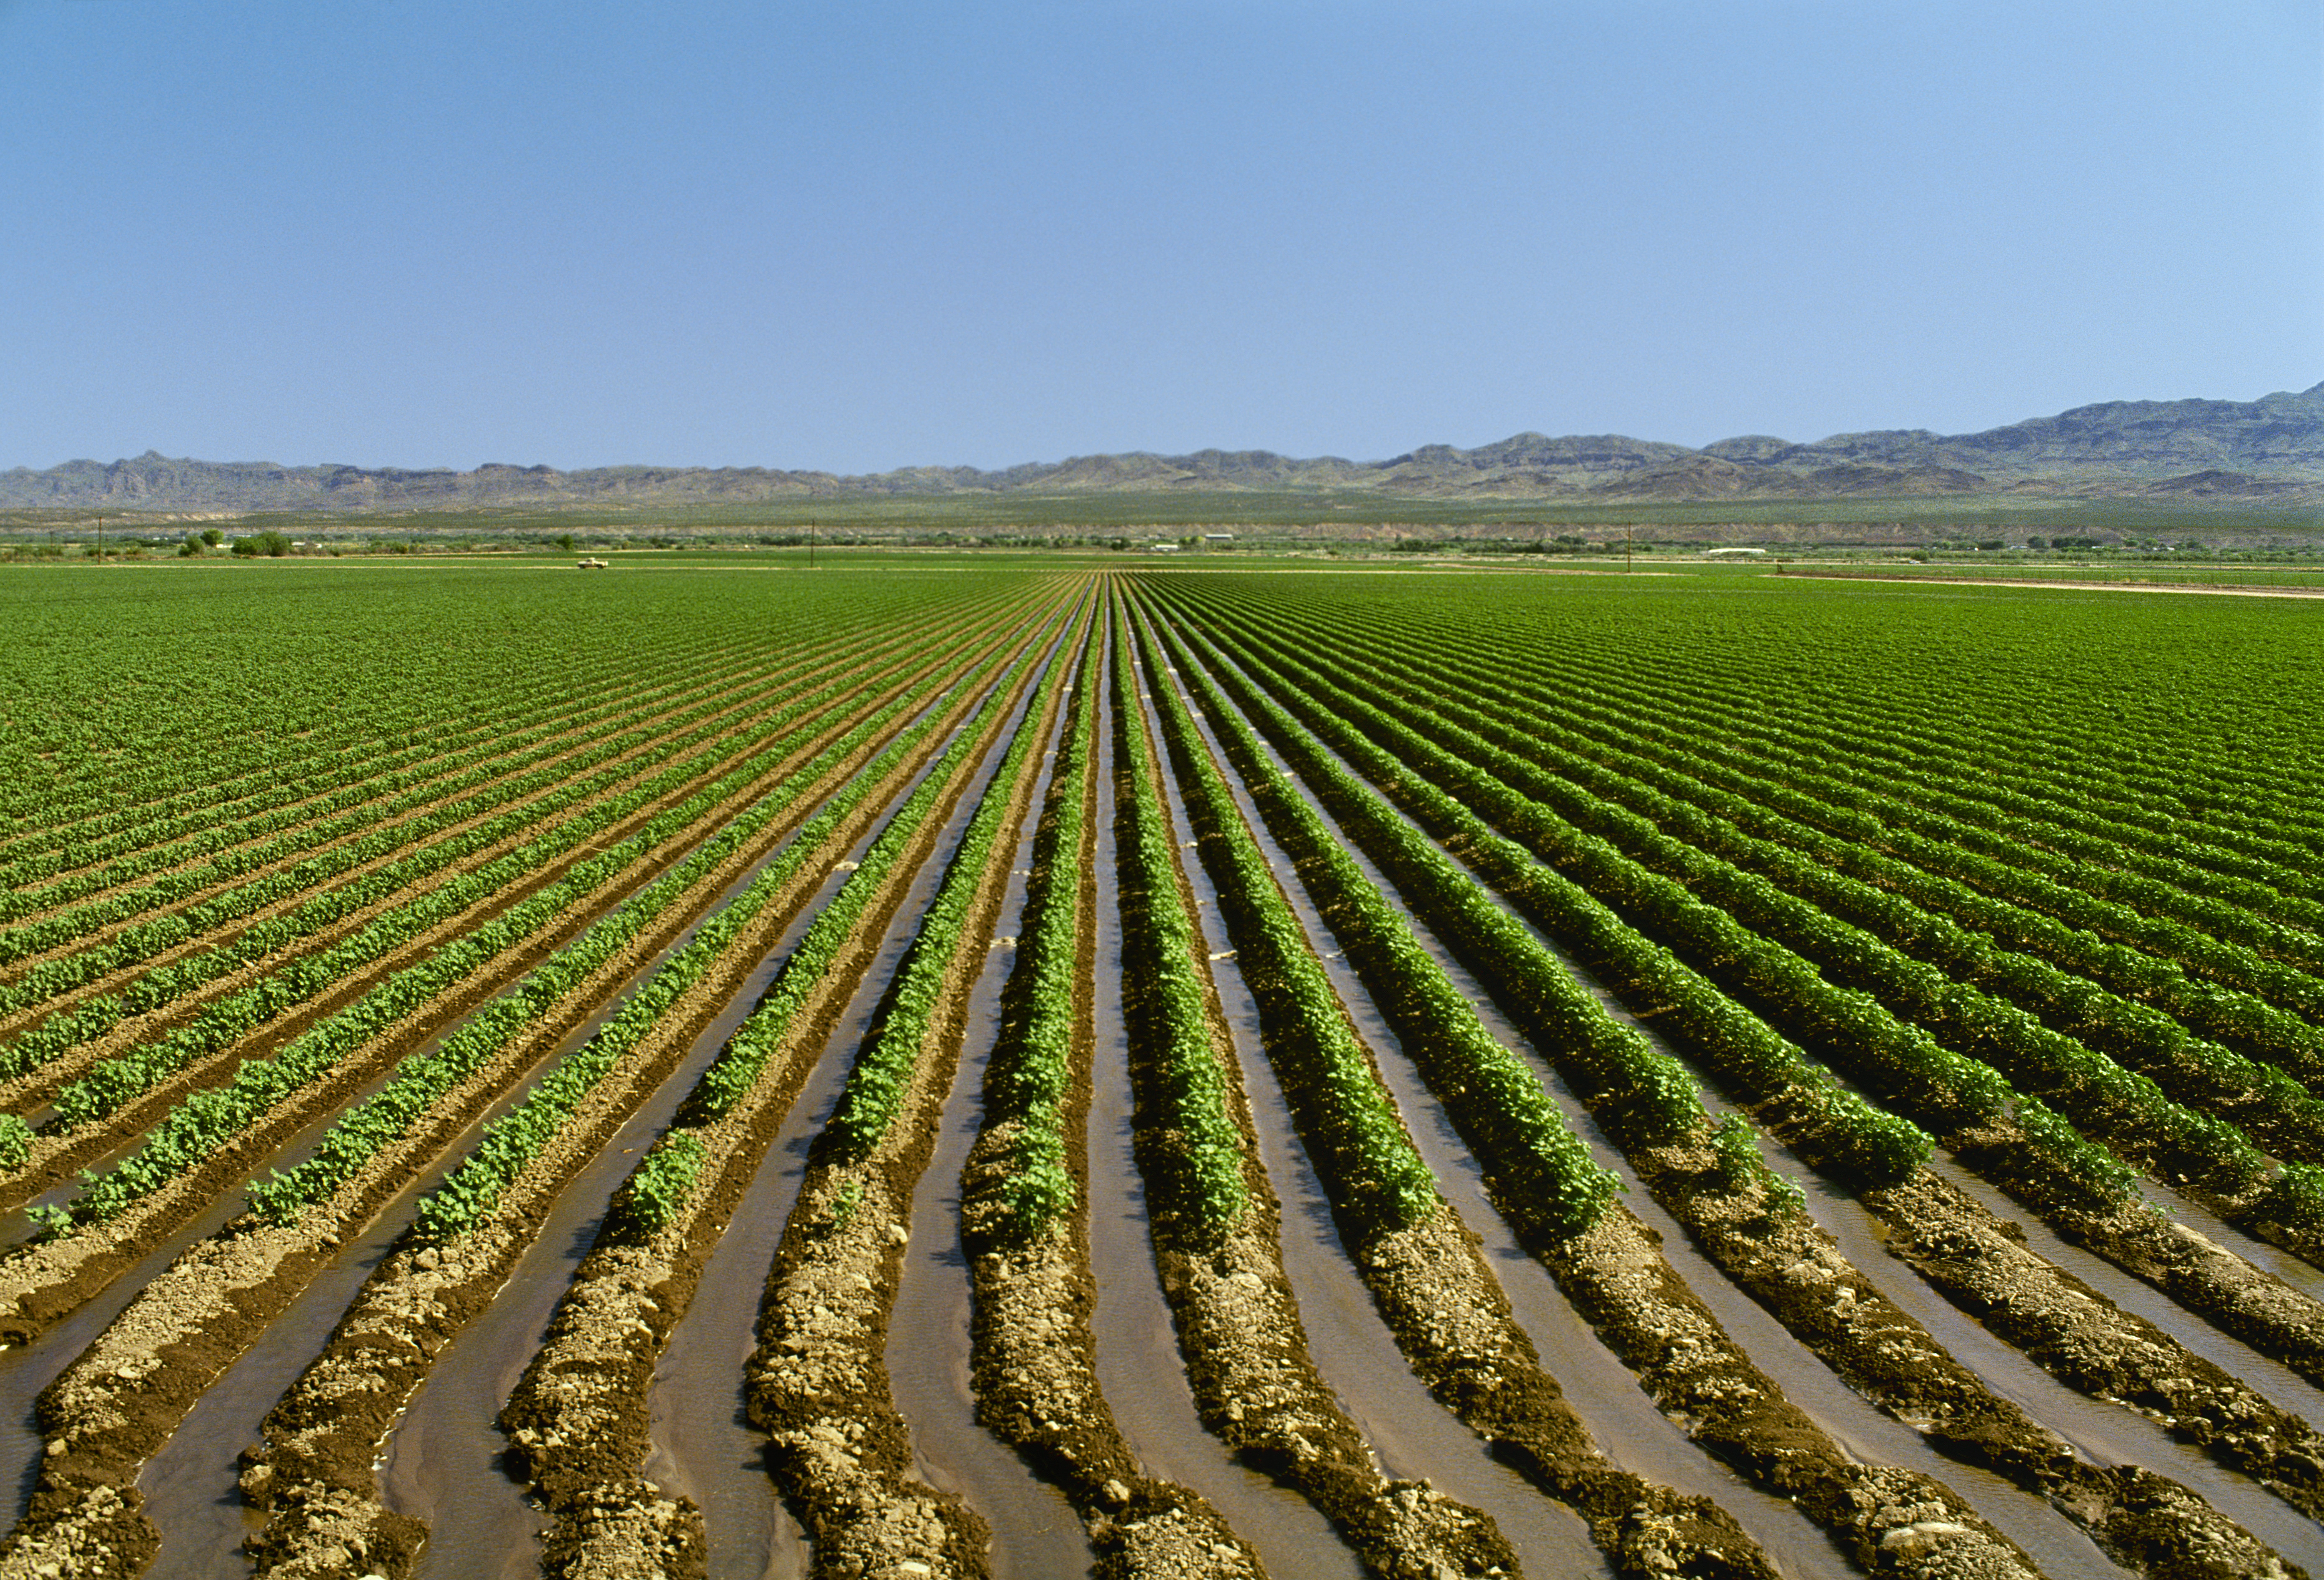 irrigated-field-of-cotton - Arizona Pictures - Arizona - HISTORY.com